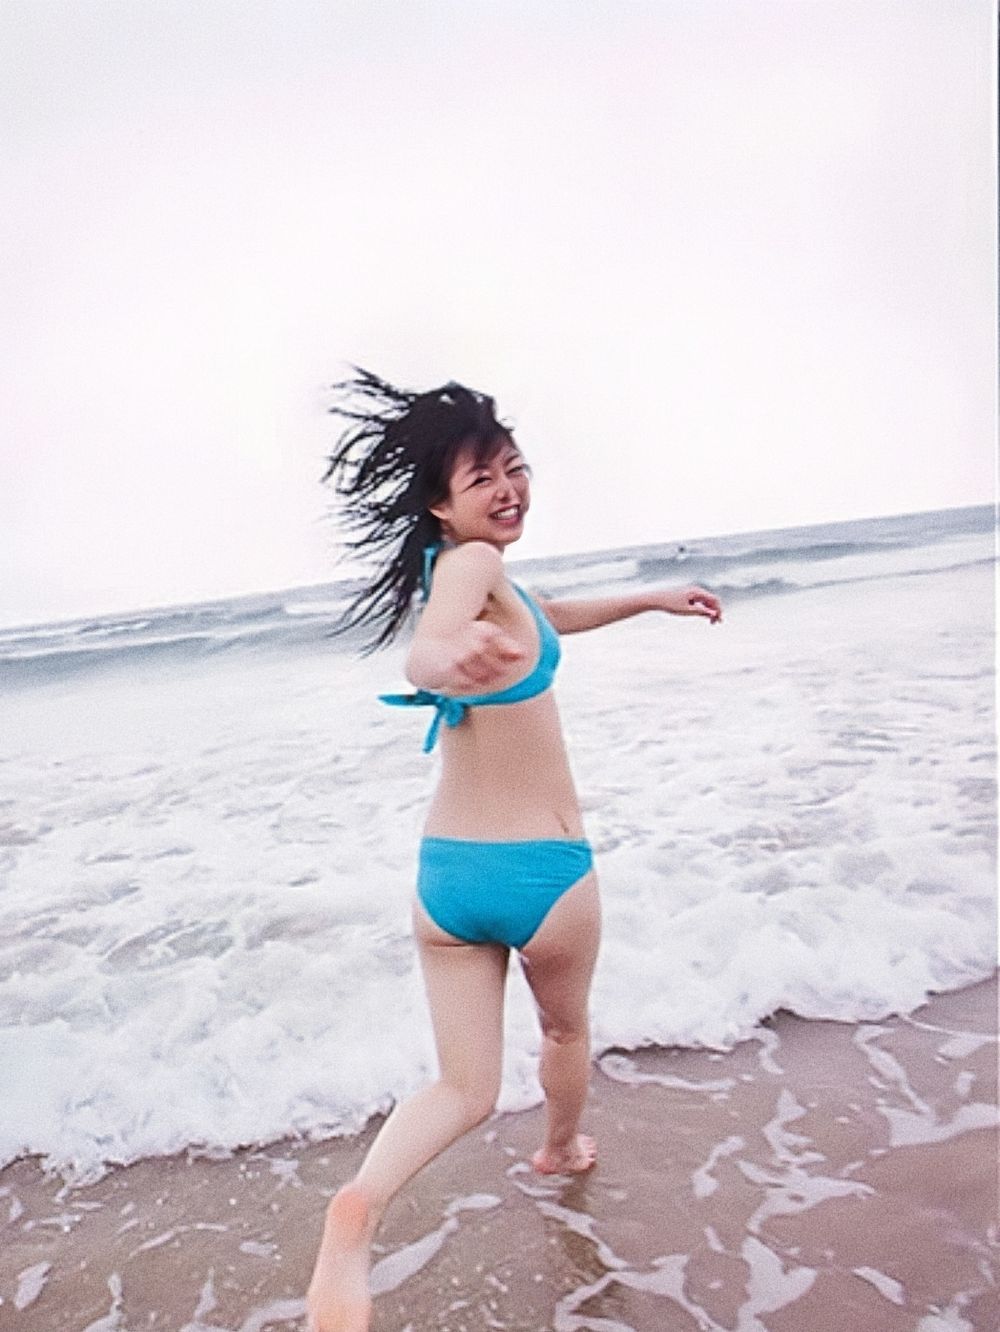 Aki Asakura Sexy and Hottest Photos , Latest Pics